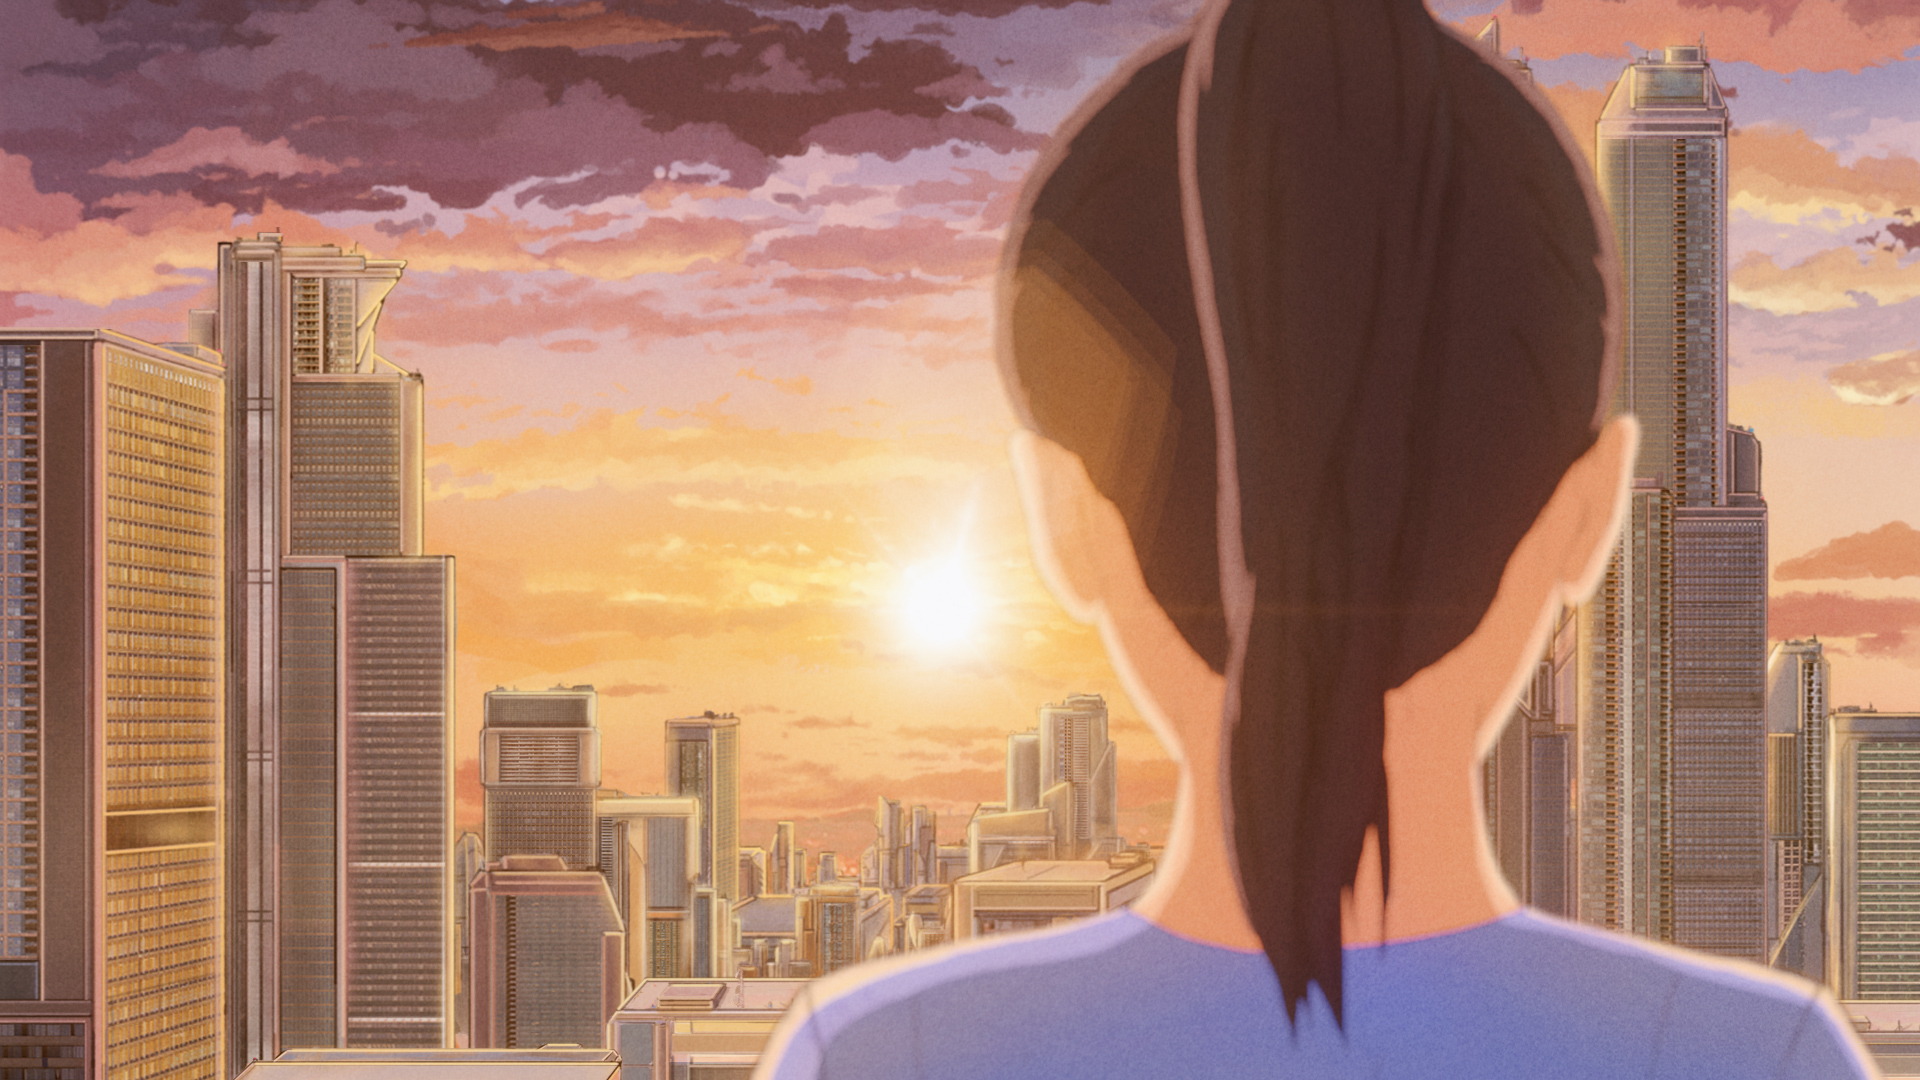 Anime 1920x1080 outdoors digital art anime city city sunset glow clouds sky anime building cityscape anime girls sunset rooftops Back Focus